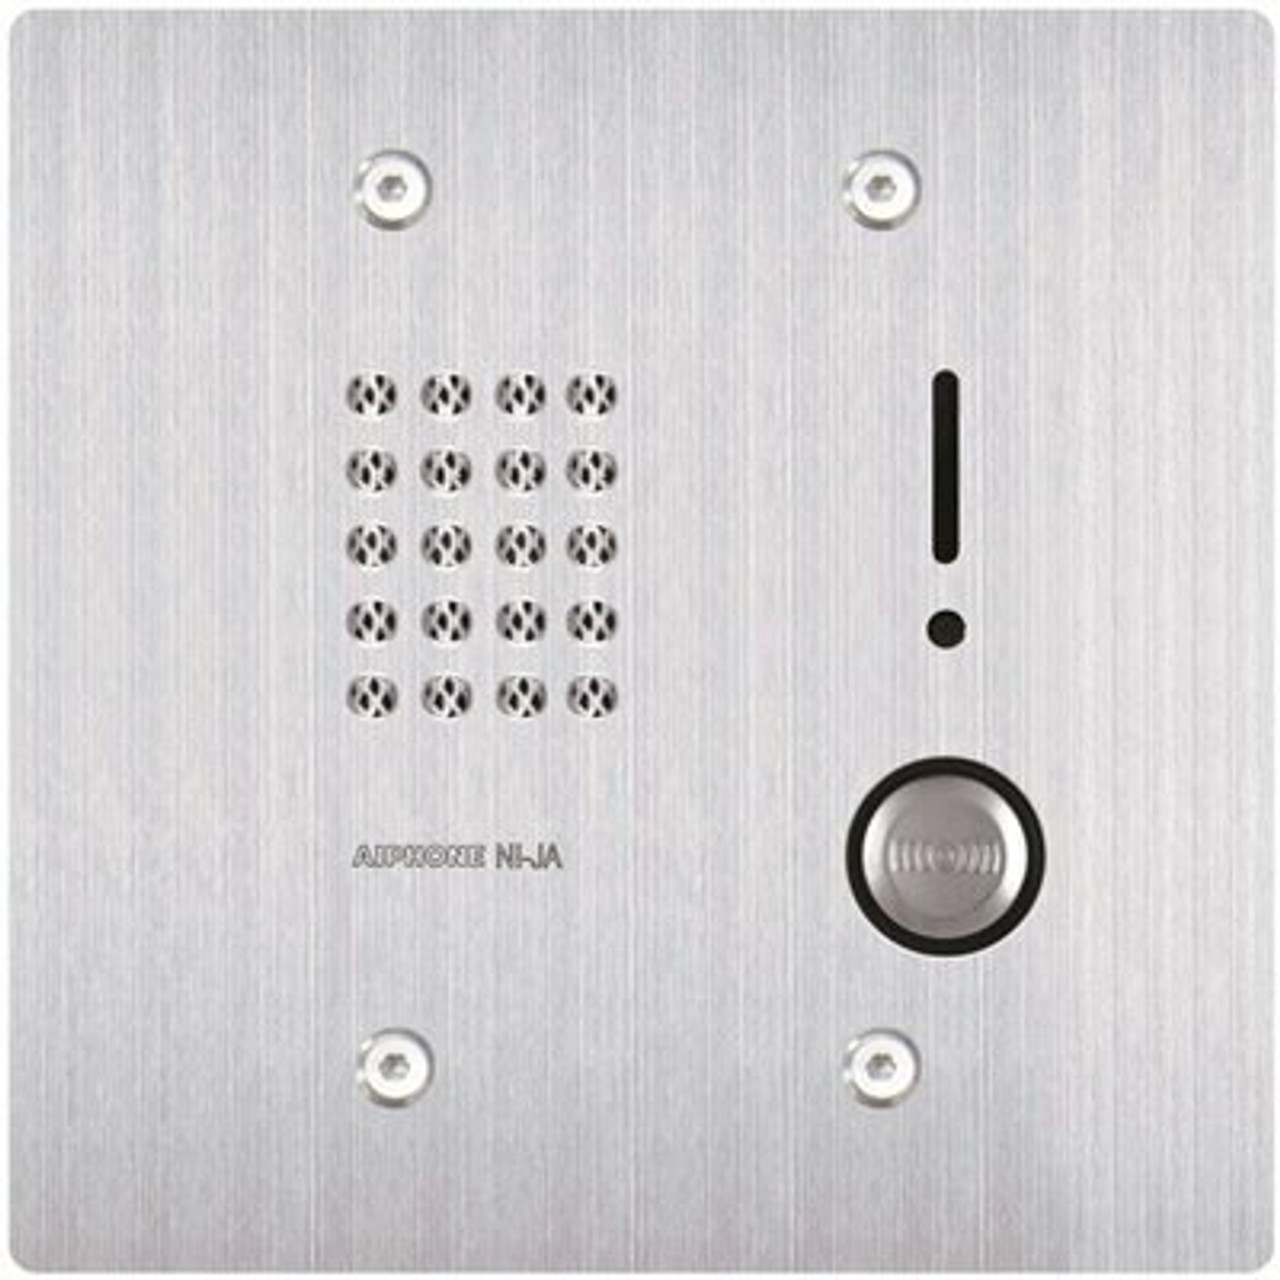 Aiphone Nim Series Flush Mount 1-Channel Audio Door Station Intercom, Stainless Steel